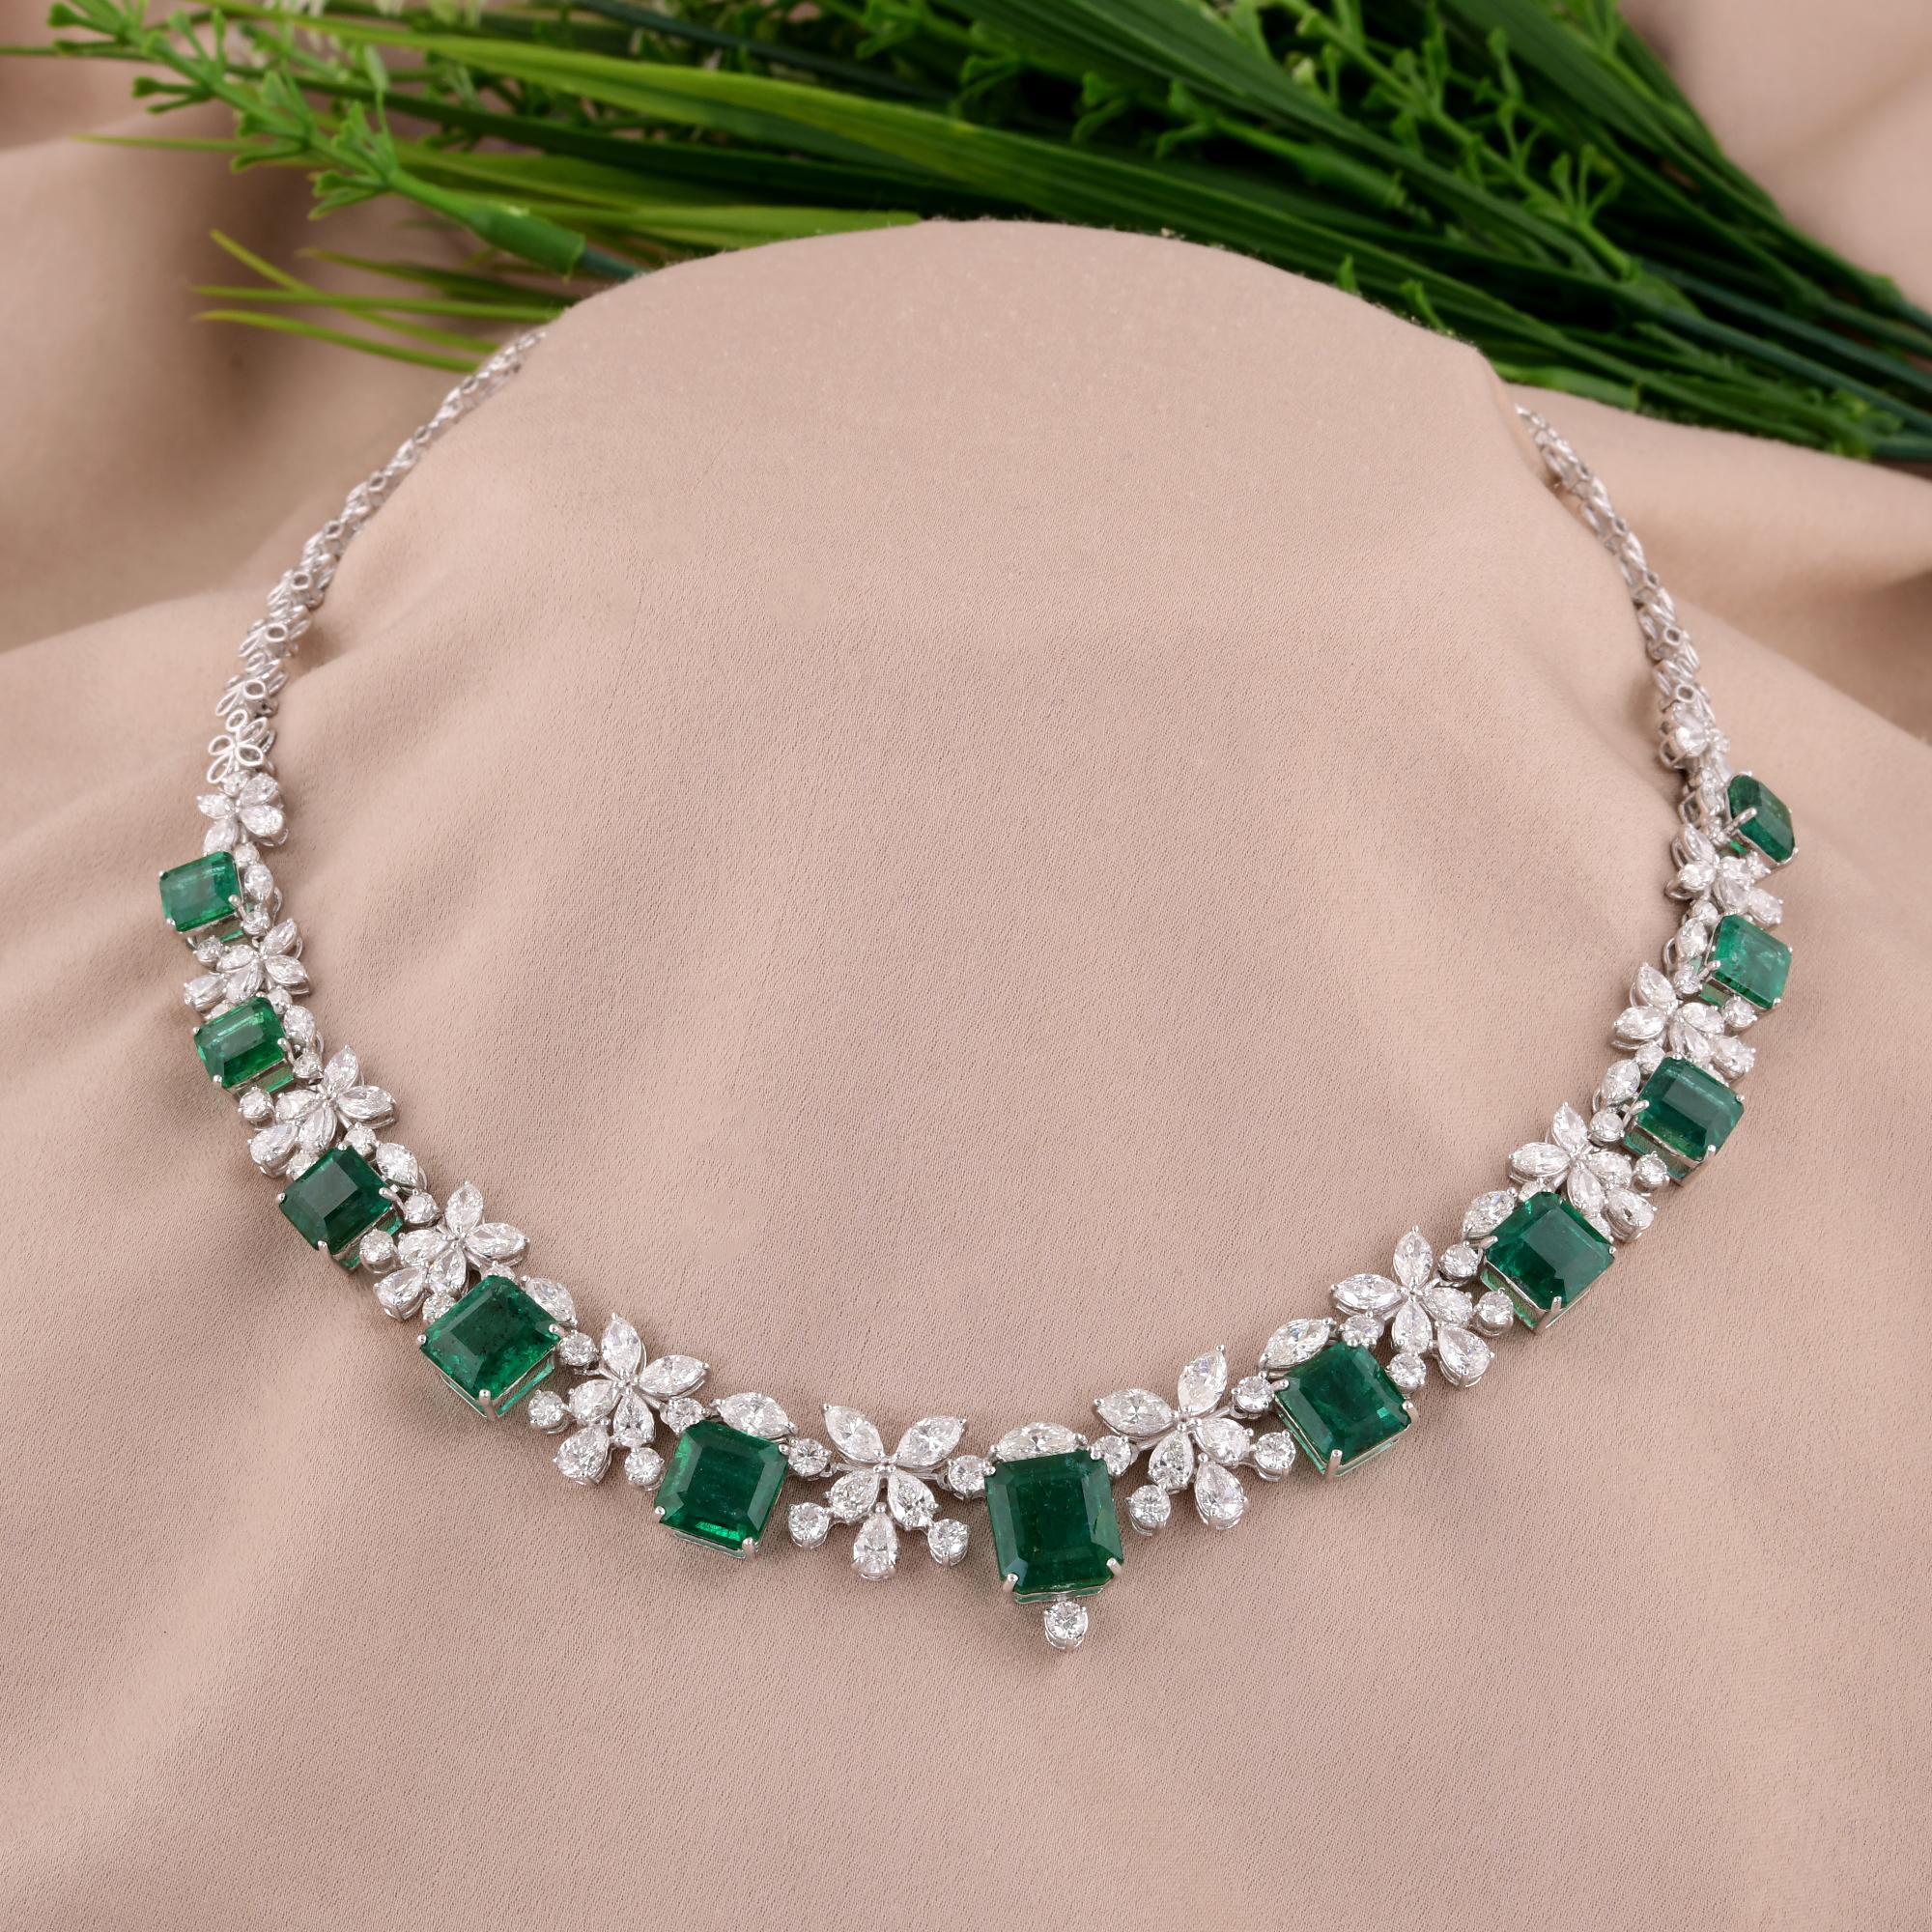 Emerald Cut Zambian Emerald Gemstone Necklace Diamond 18 Karat White Gold Handmade Jewelry For Sale